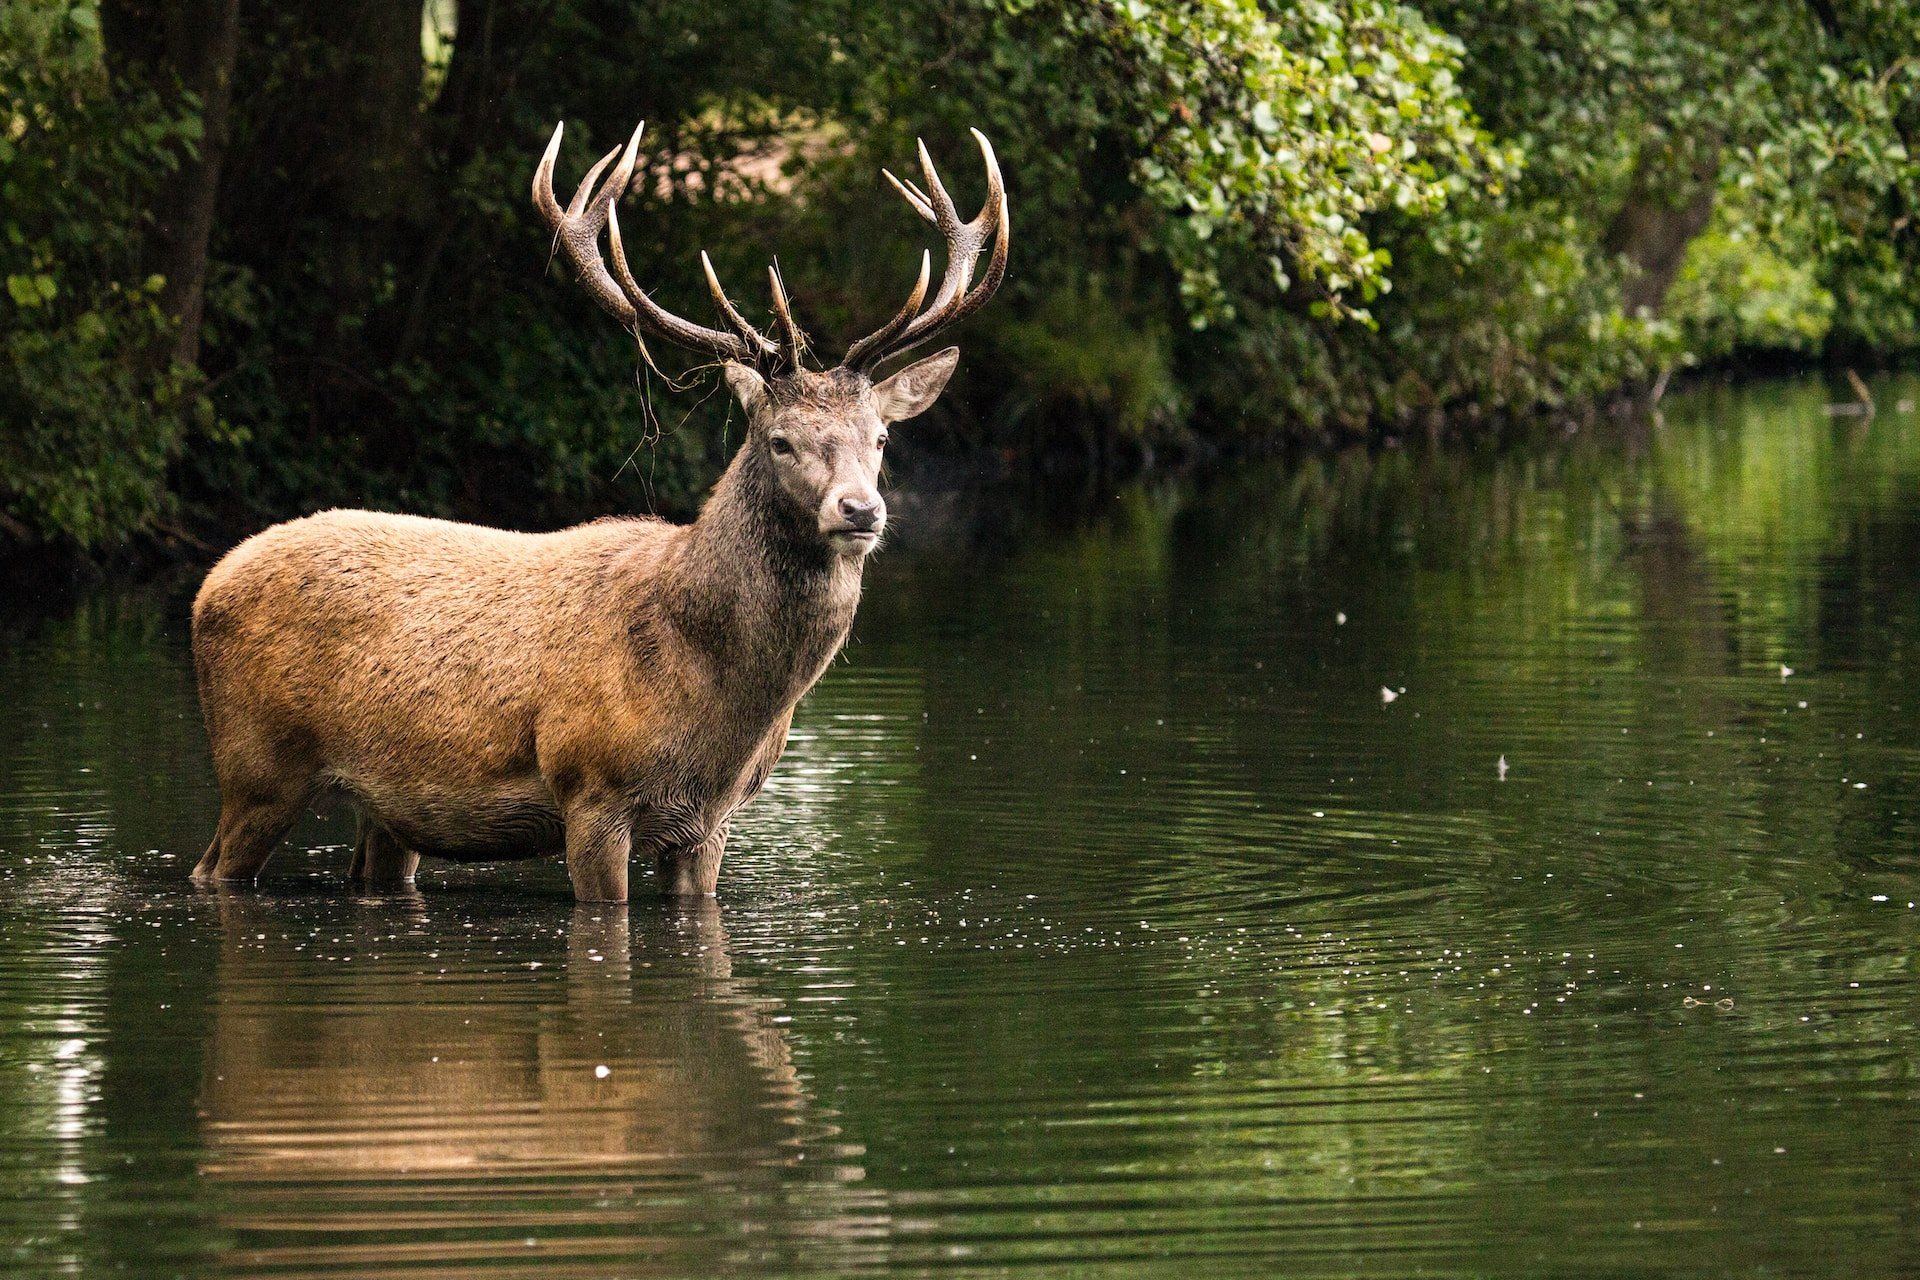 A deer wading in water